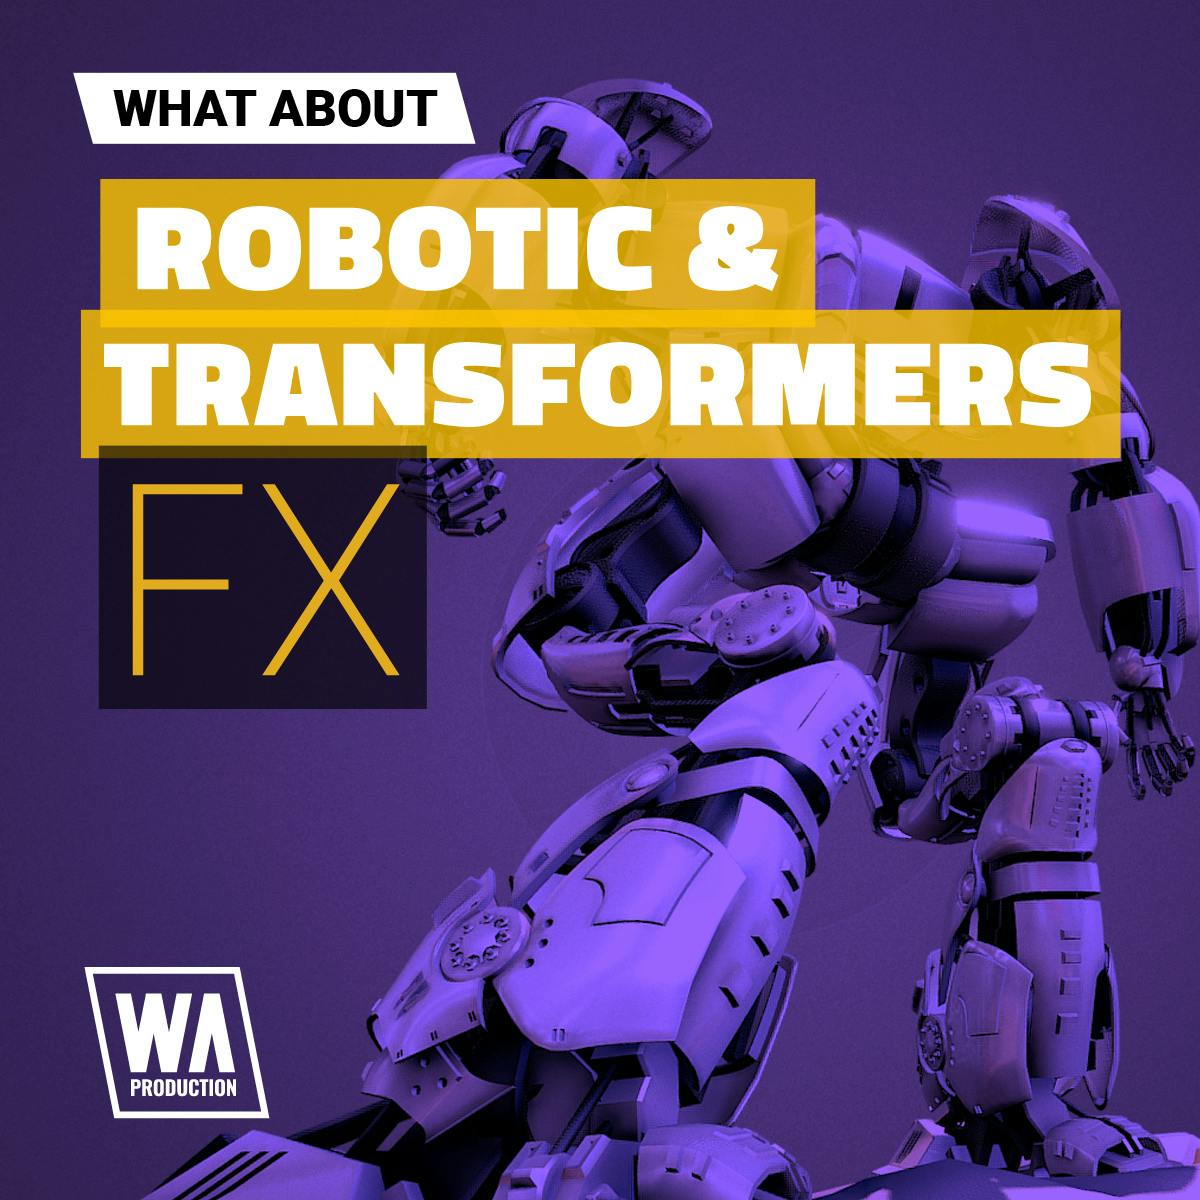 Robotic & Transformers FX | W. A. Production